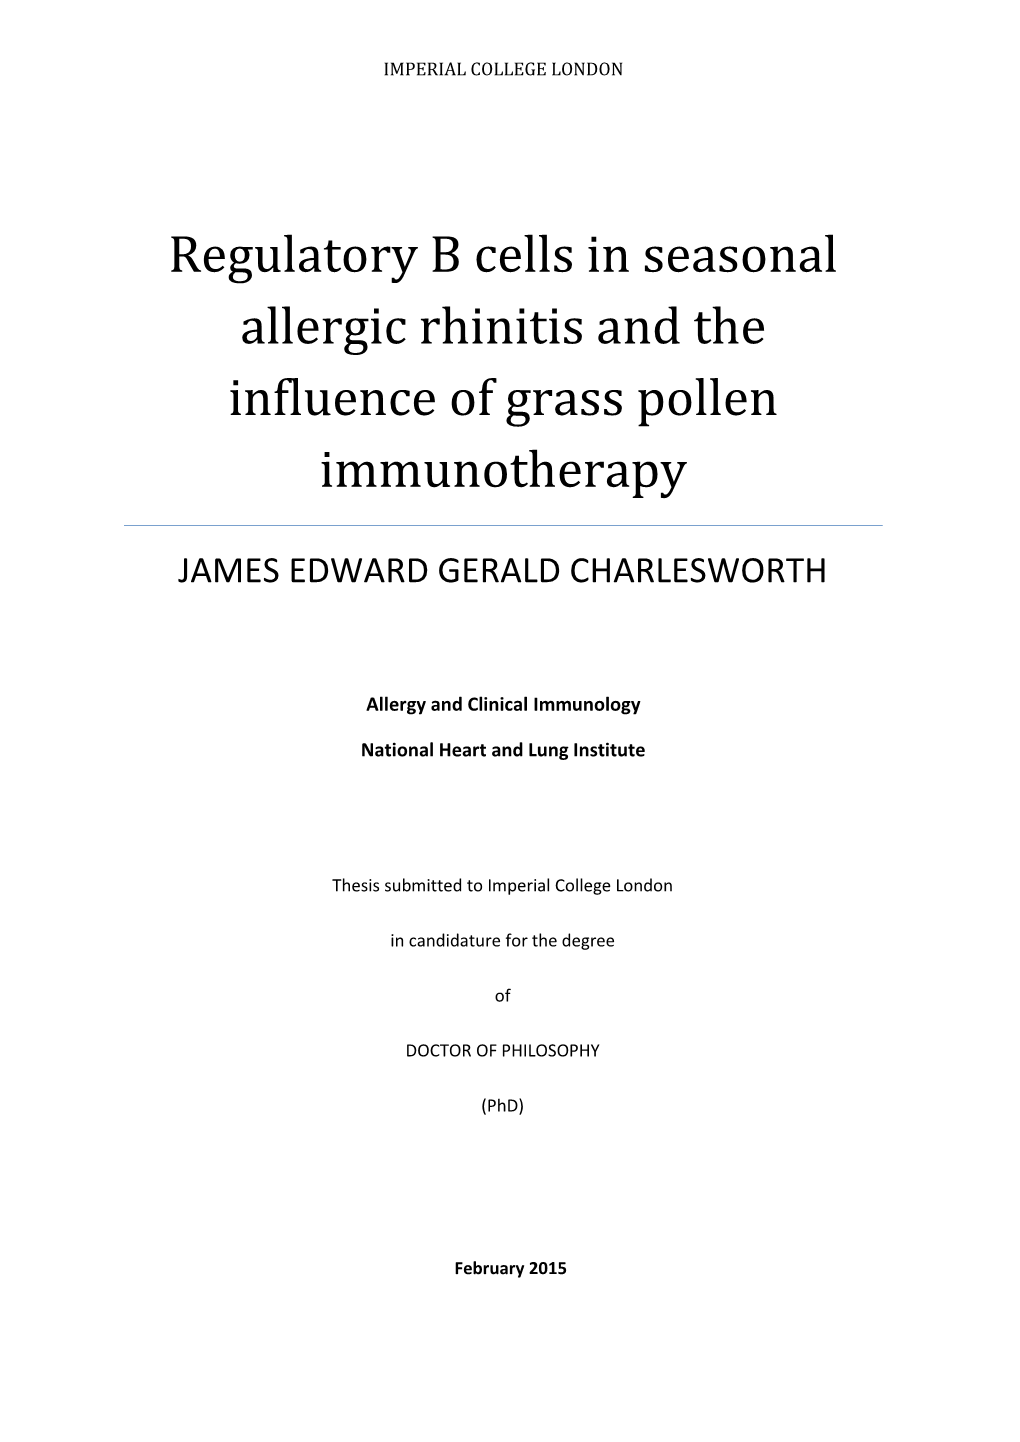 Regulatory B Cells in Seasonal Allergic Rhinitis and the Influence of Grass Pollen